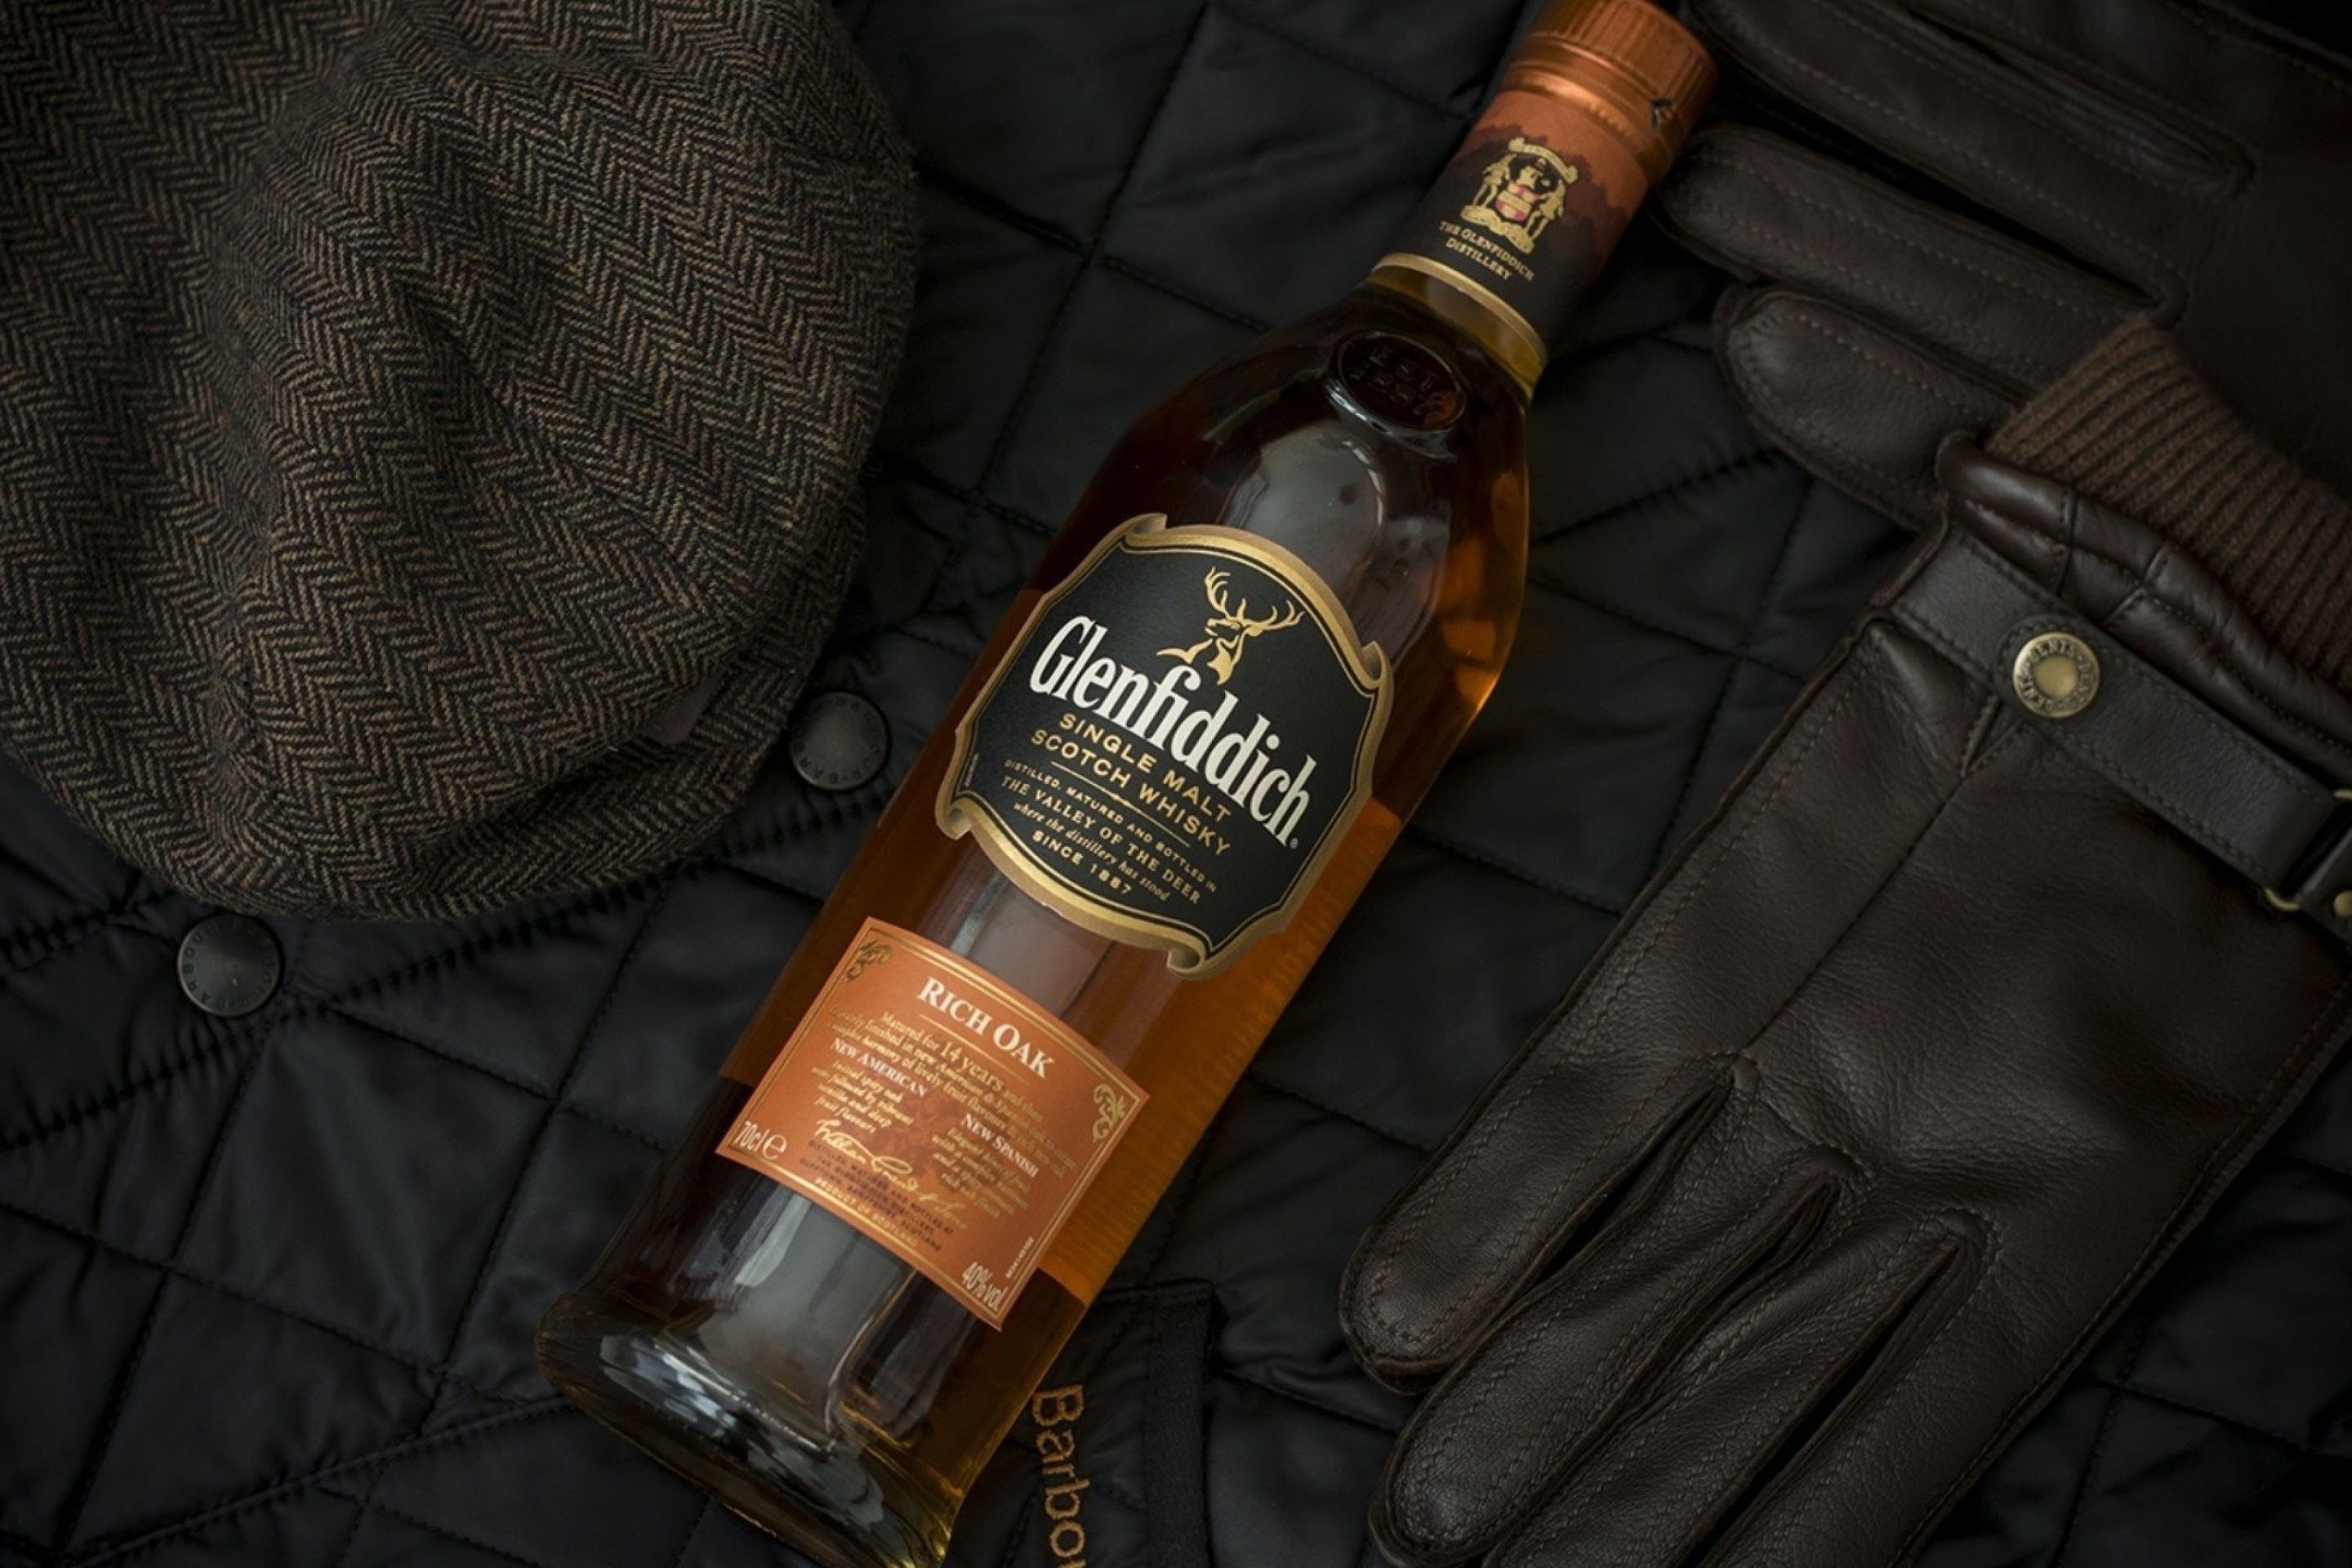 Das Glenfiddich single malt Scotch Whisky Wallpaper 2880x1920